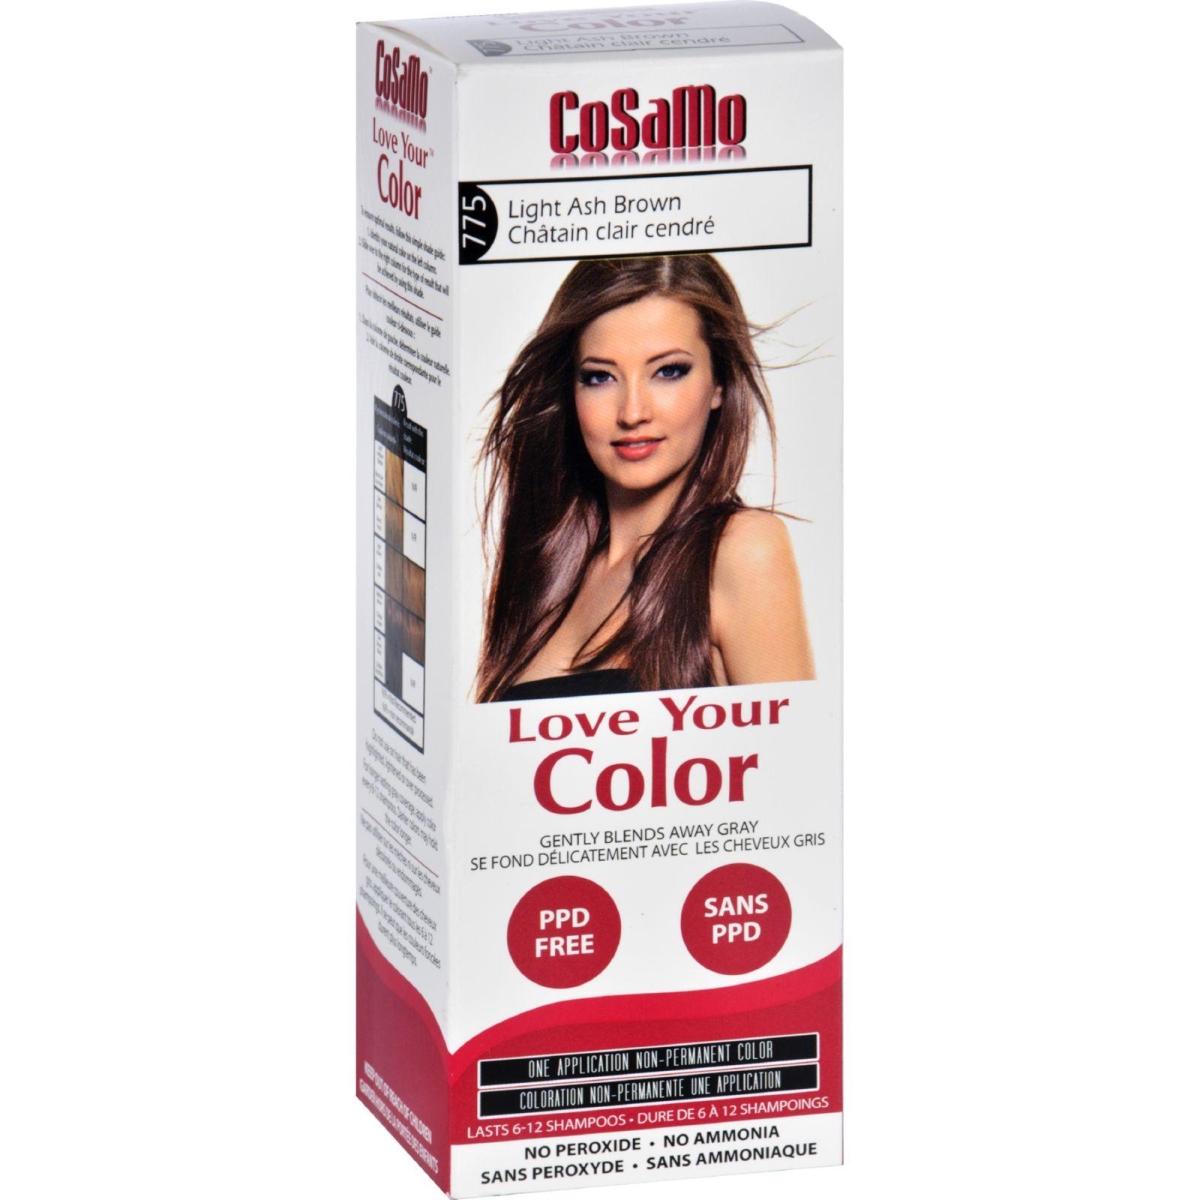 Hg1577980 Hair Color Cosamo Non Permanent, Light Ash Brown - 1 Count